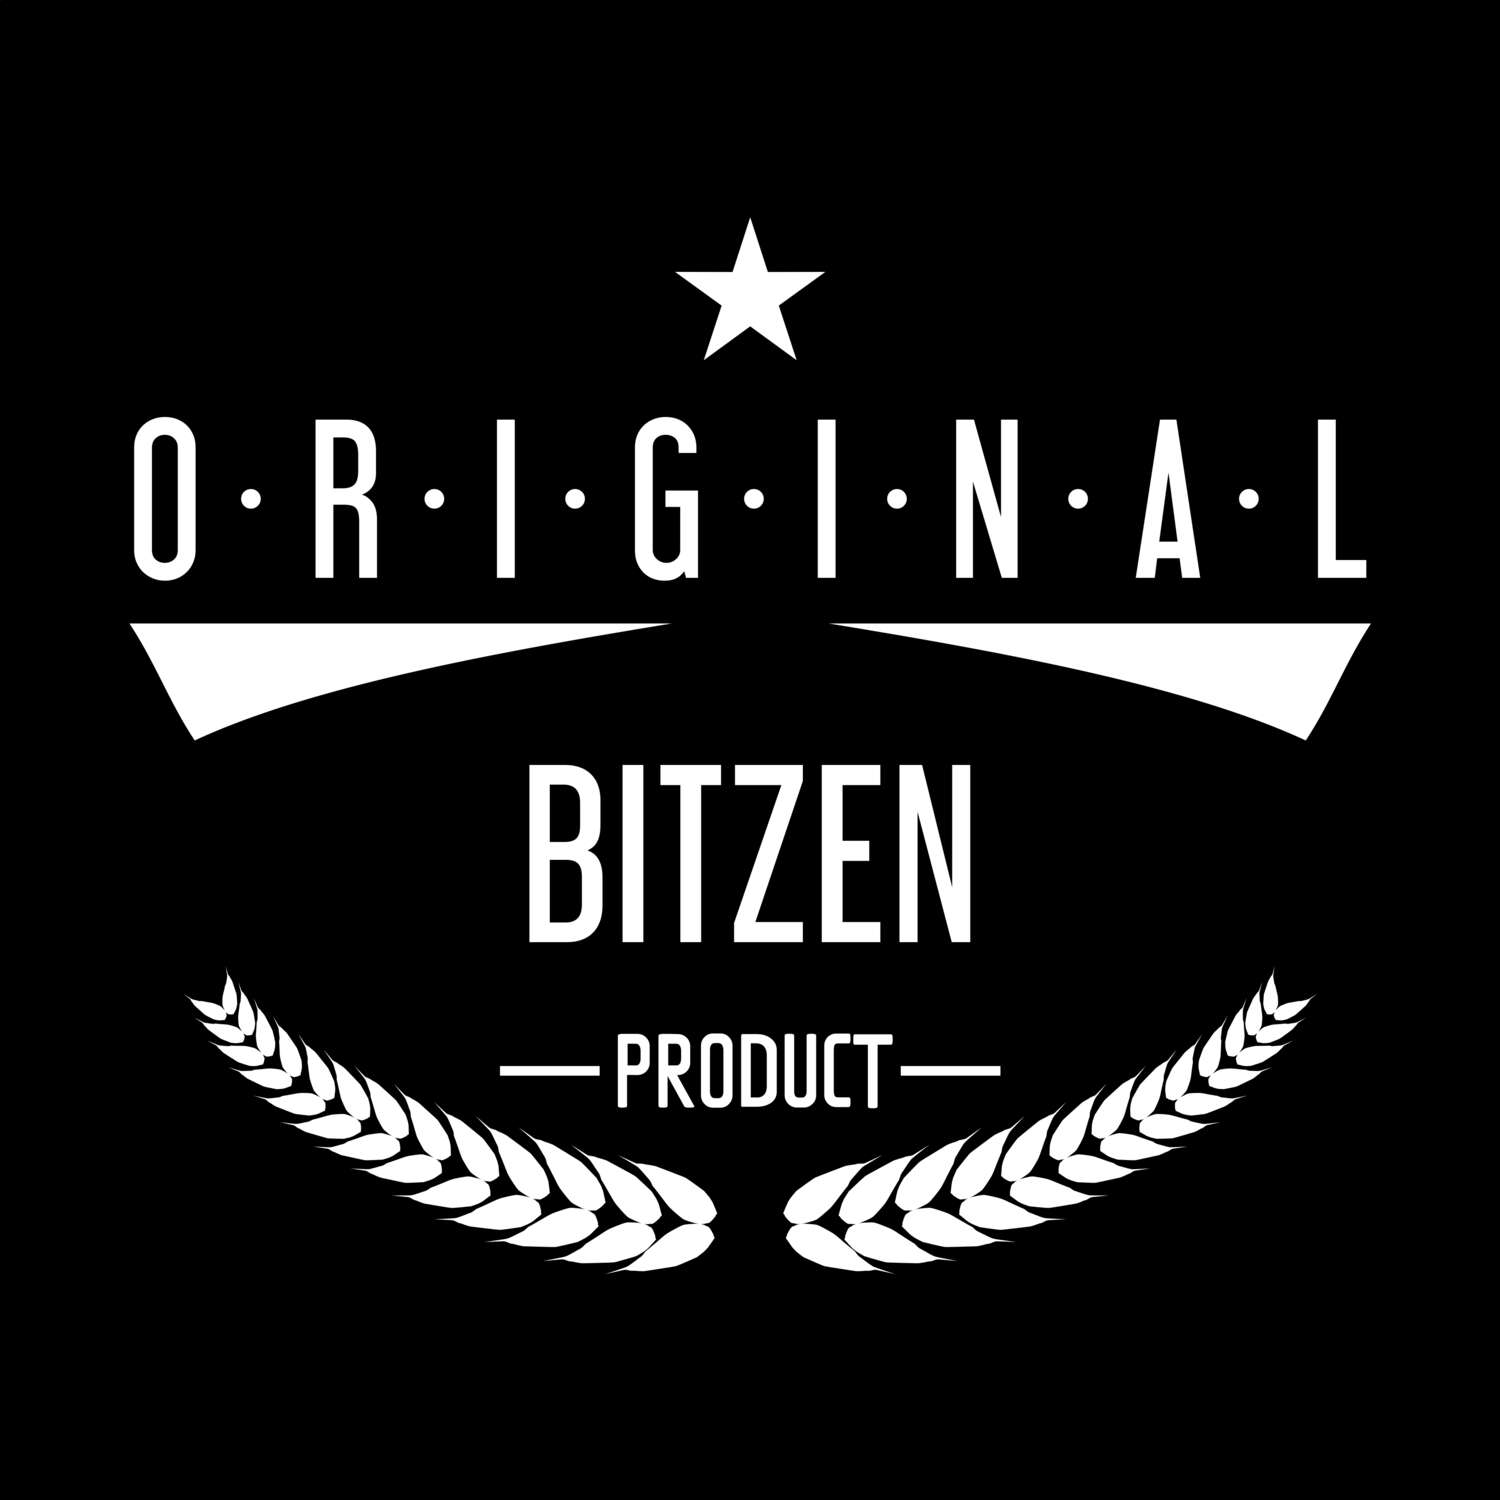 Bitzen T-Shirt »Original Product«